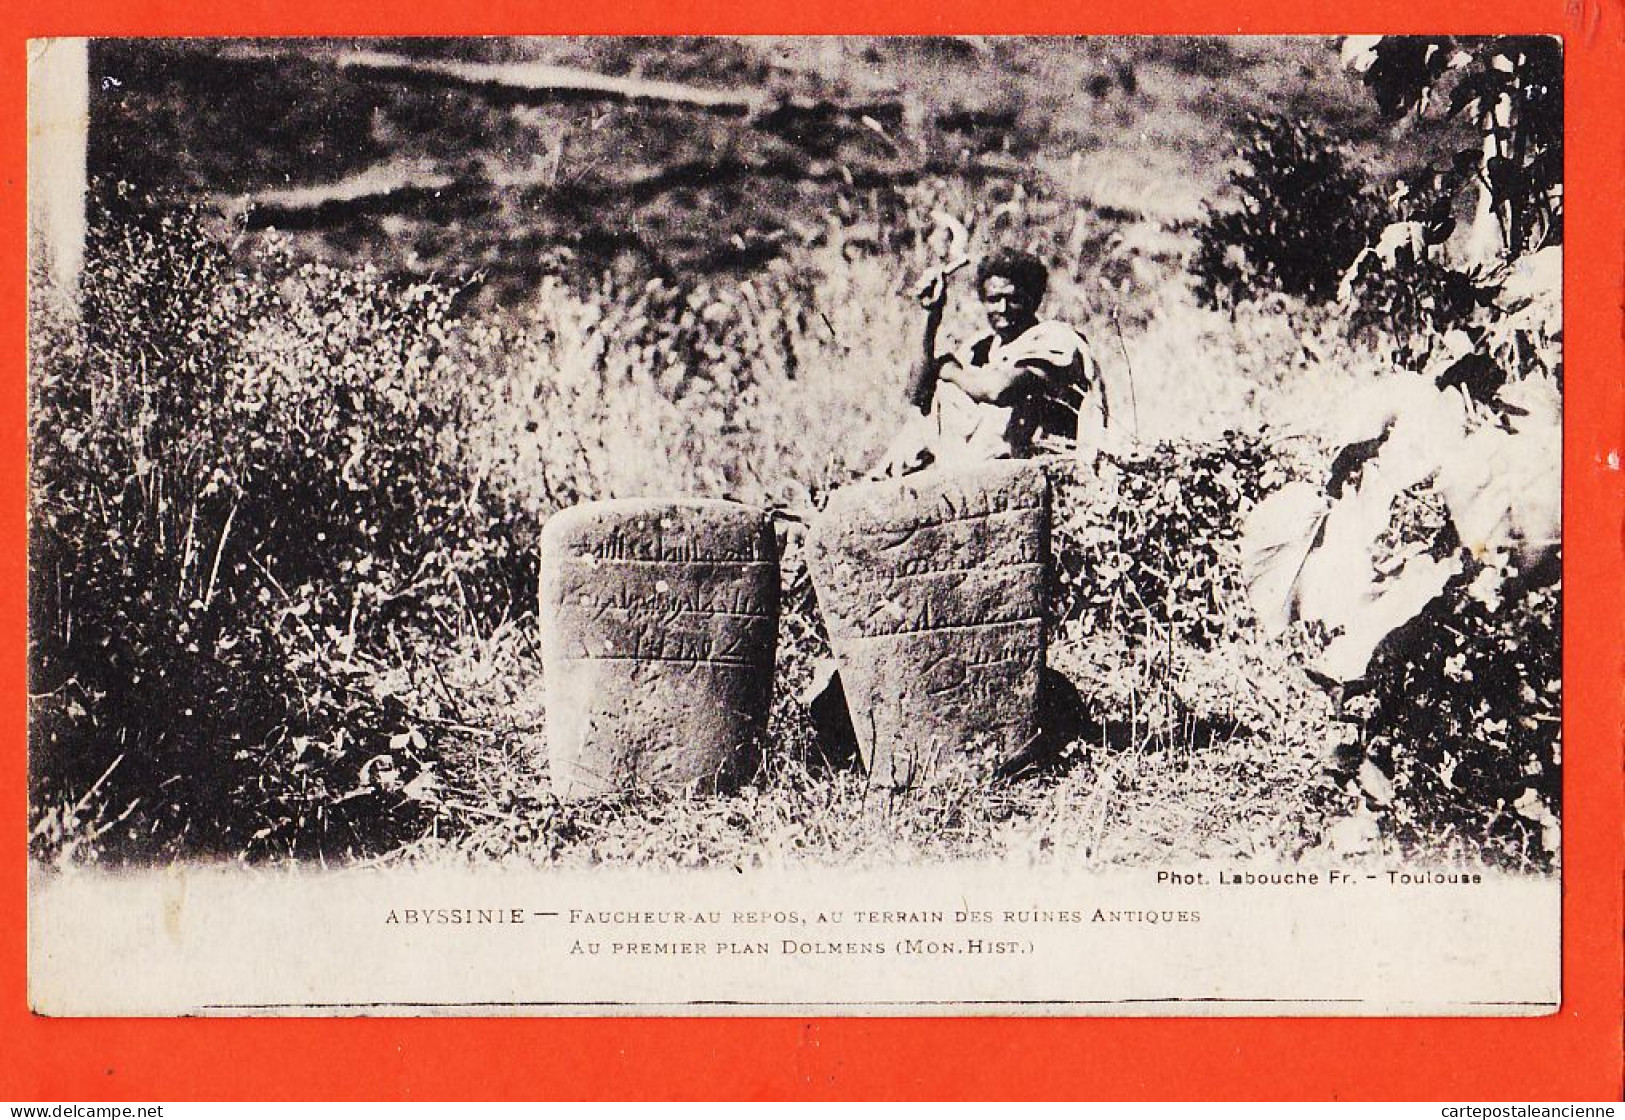 08002 ● ● Photo LABOUCHE  (!) ABYSSINIE Ethiopie Faucheur Au Repos Terrain Des Ruines Antiques Au Premier Plan Dolmens  - Ethiopia